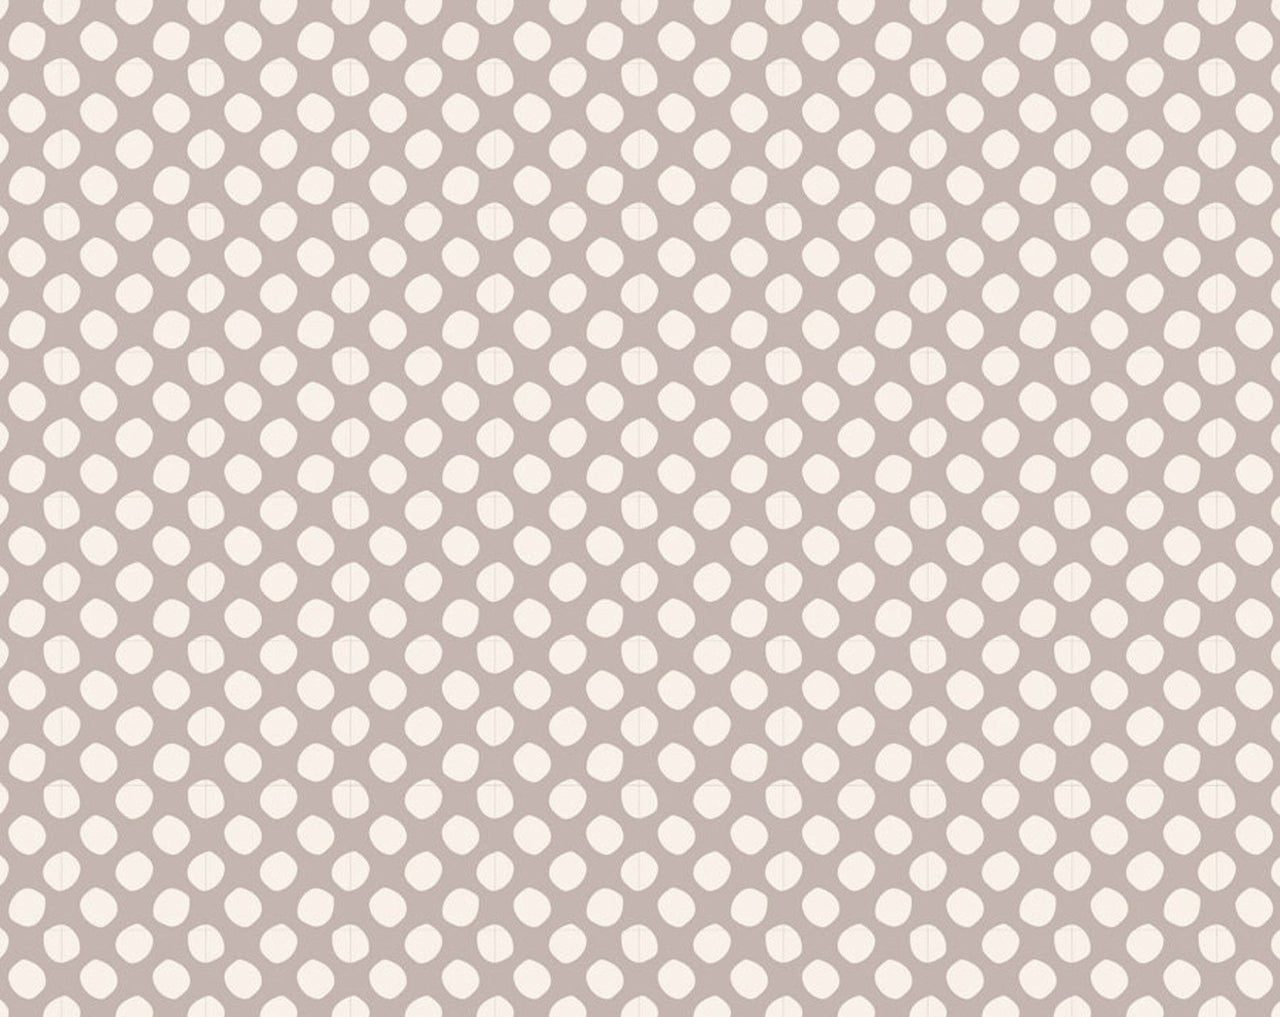 Tilda Classic Basic Paint Dots Grey available via Yardage 100% Premium Quilting Cotton